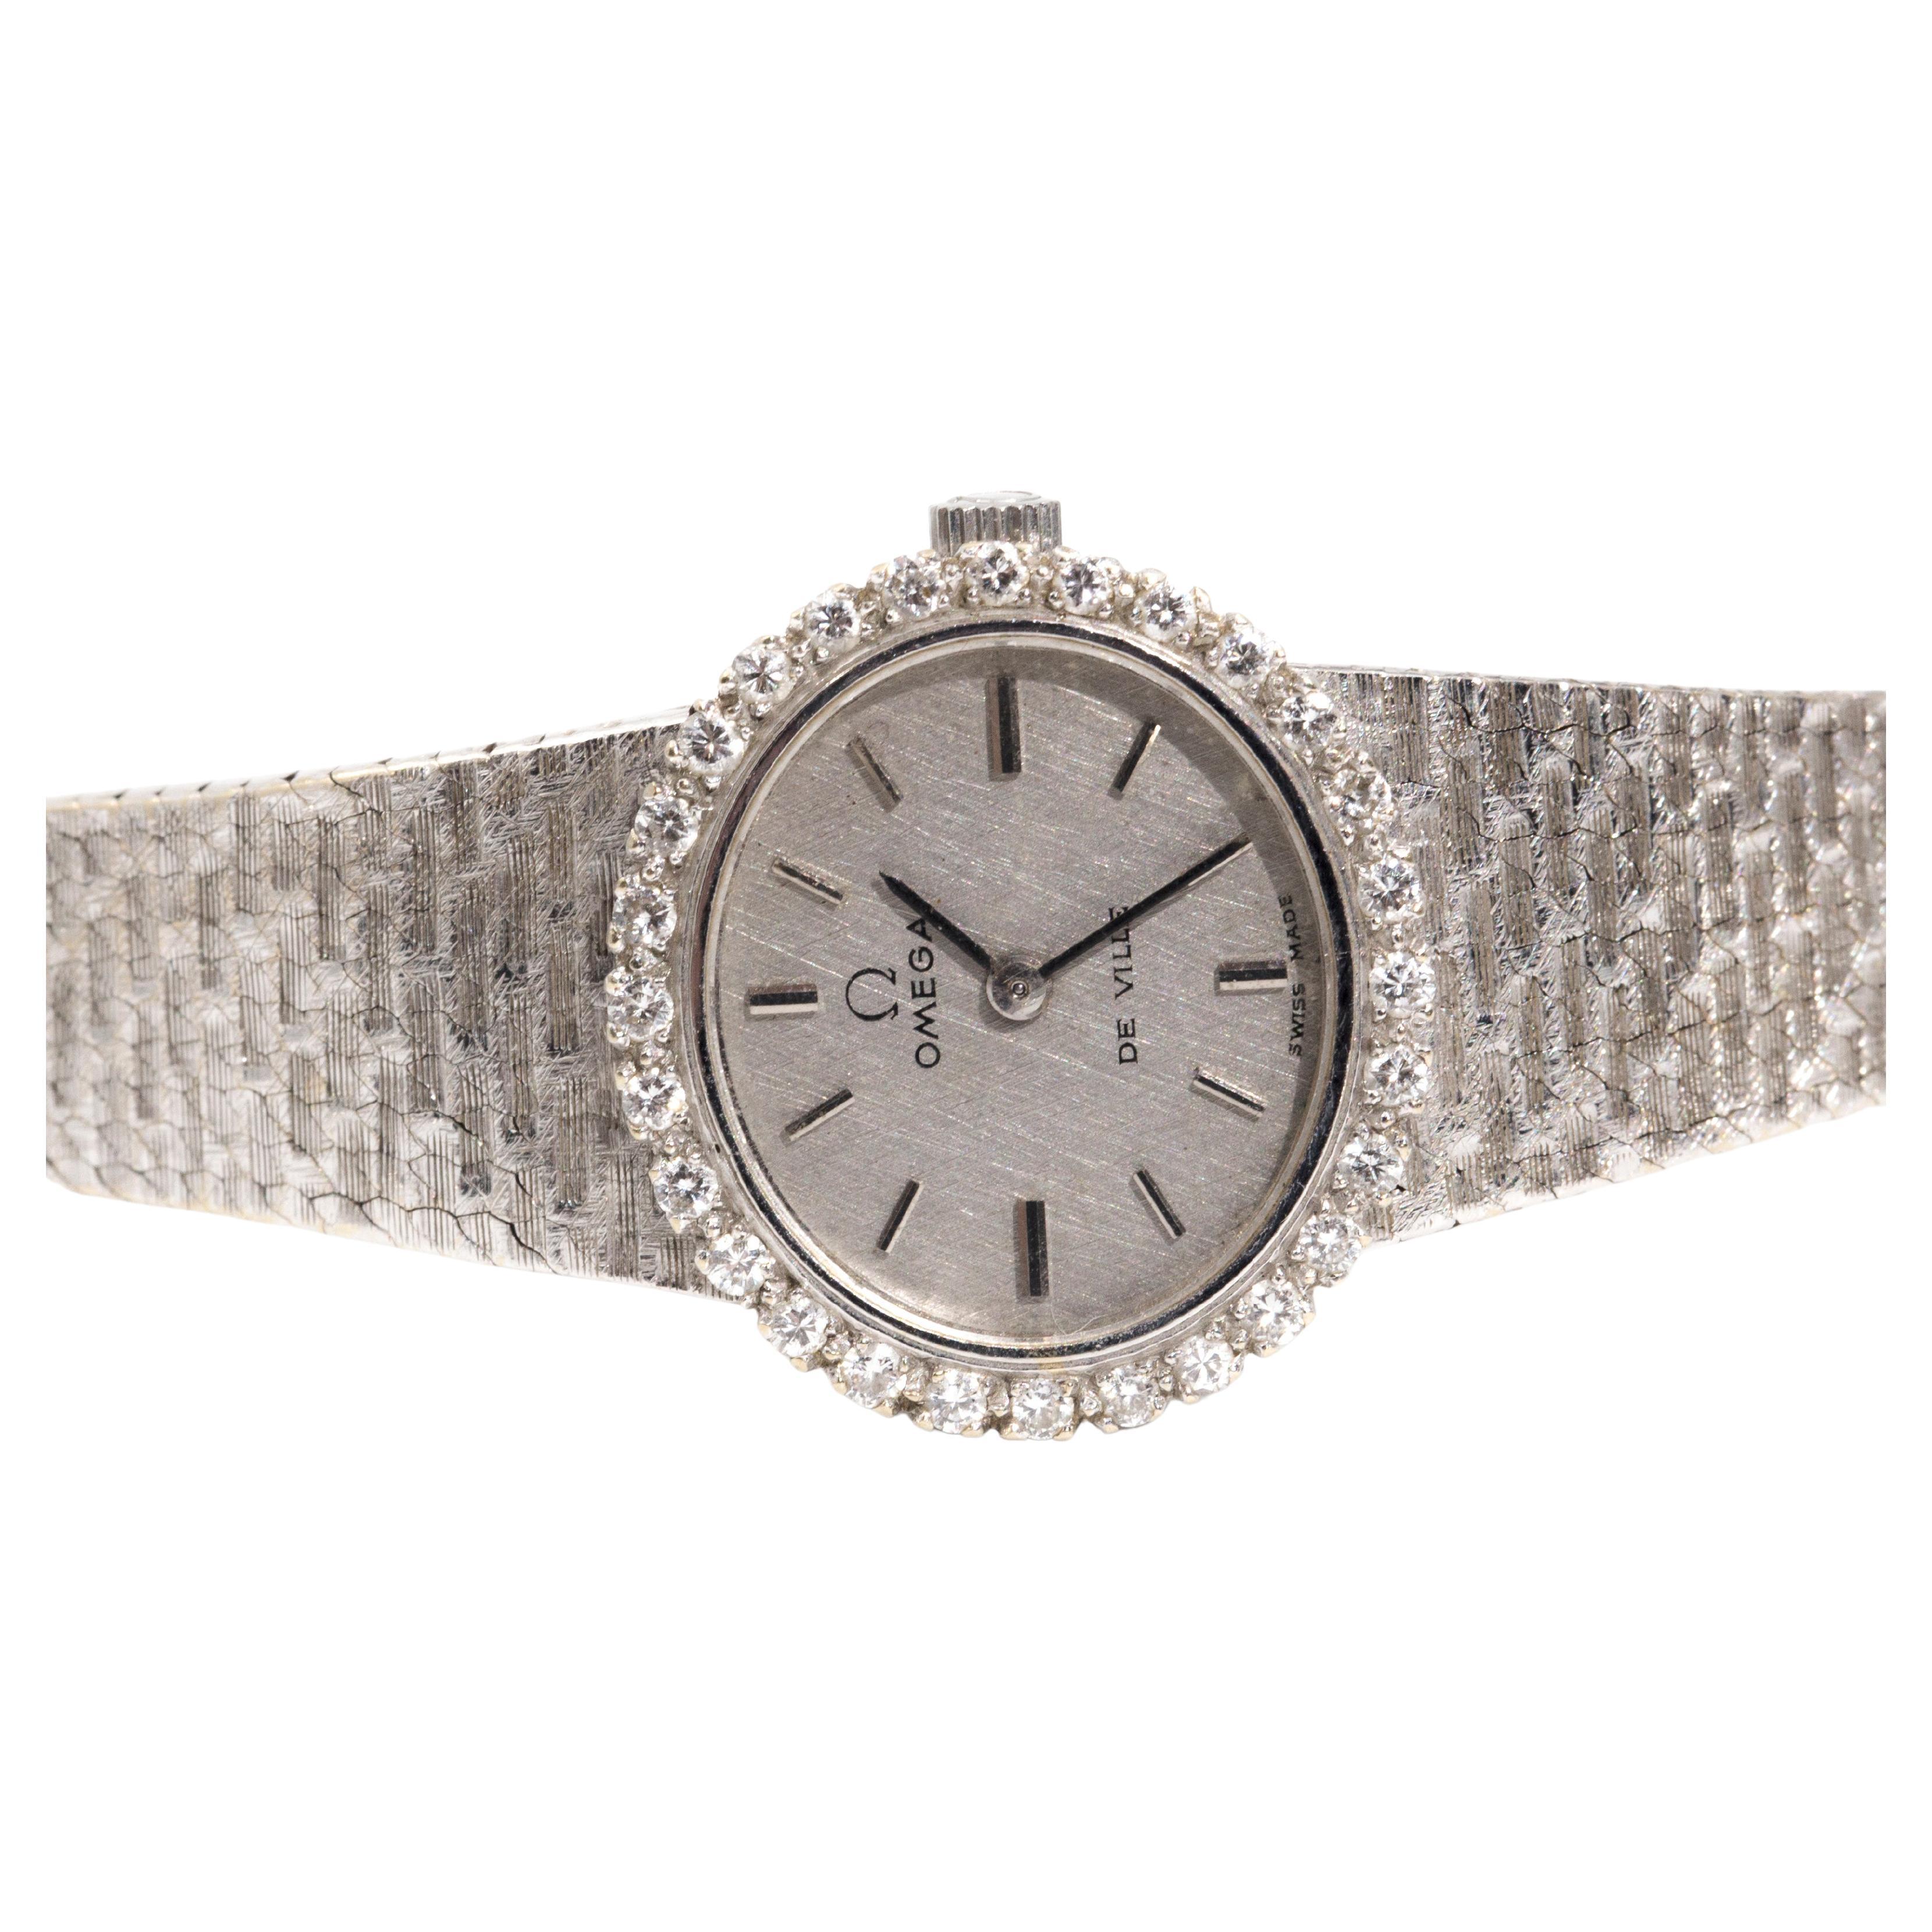  Omega De Ville 18 Carat White Gold and Diamond Vintage Ladies Automatic Watch